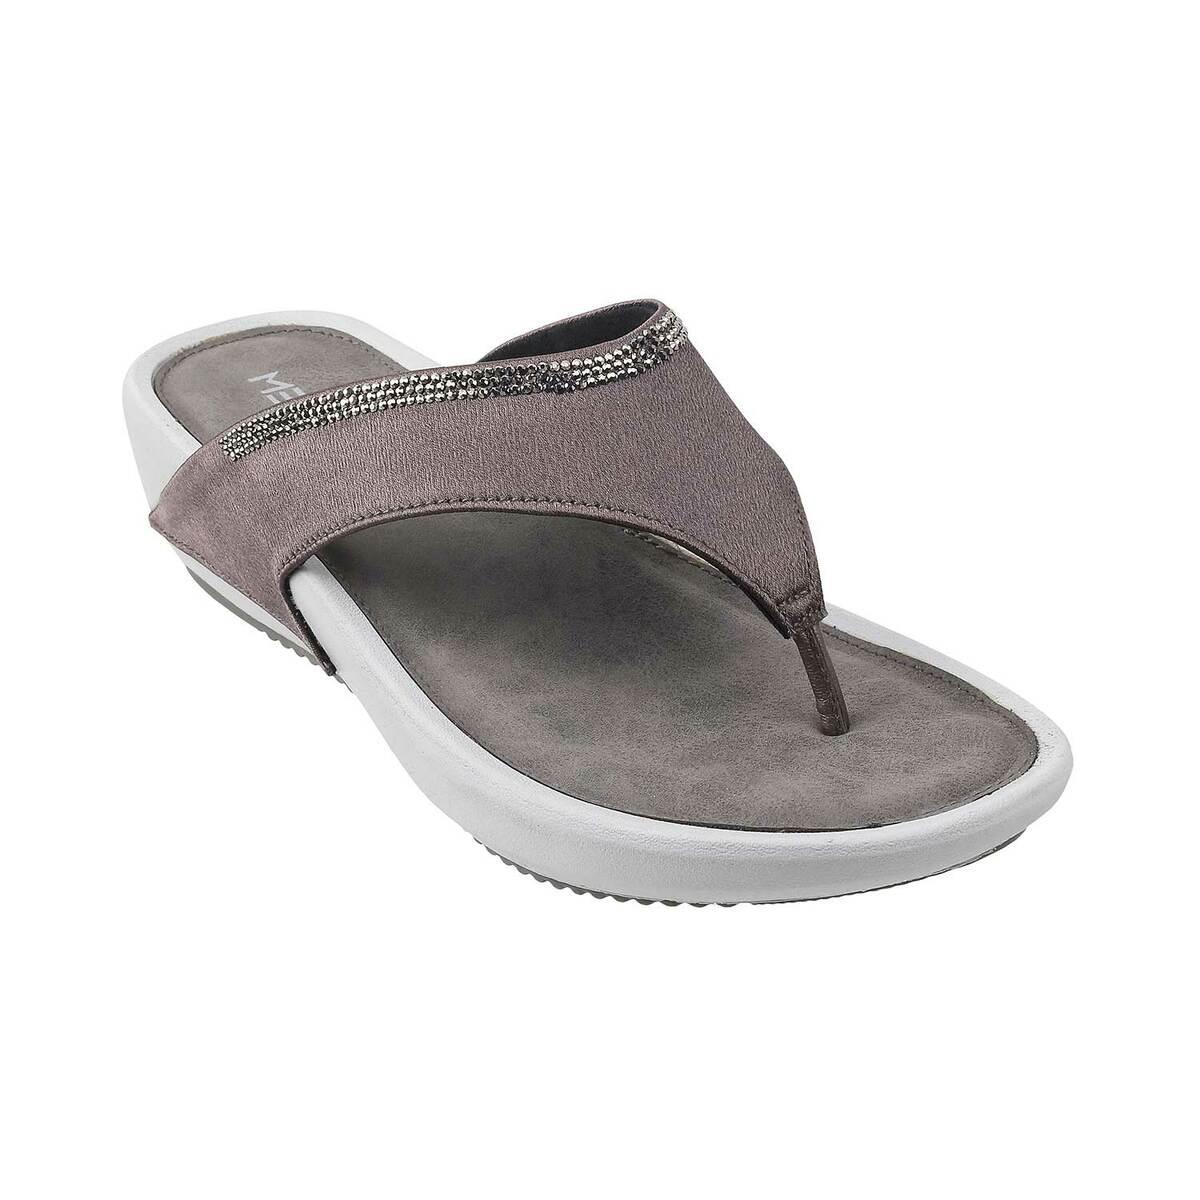 Buy Metro Women Grey Casual Slippers Online | SKU: 32-1556-29-36 ...